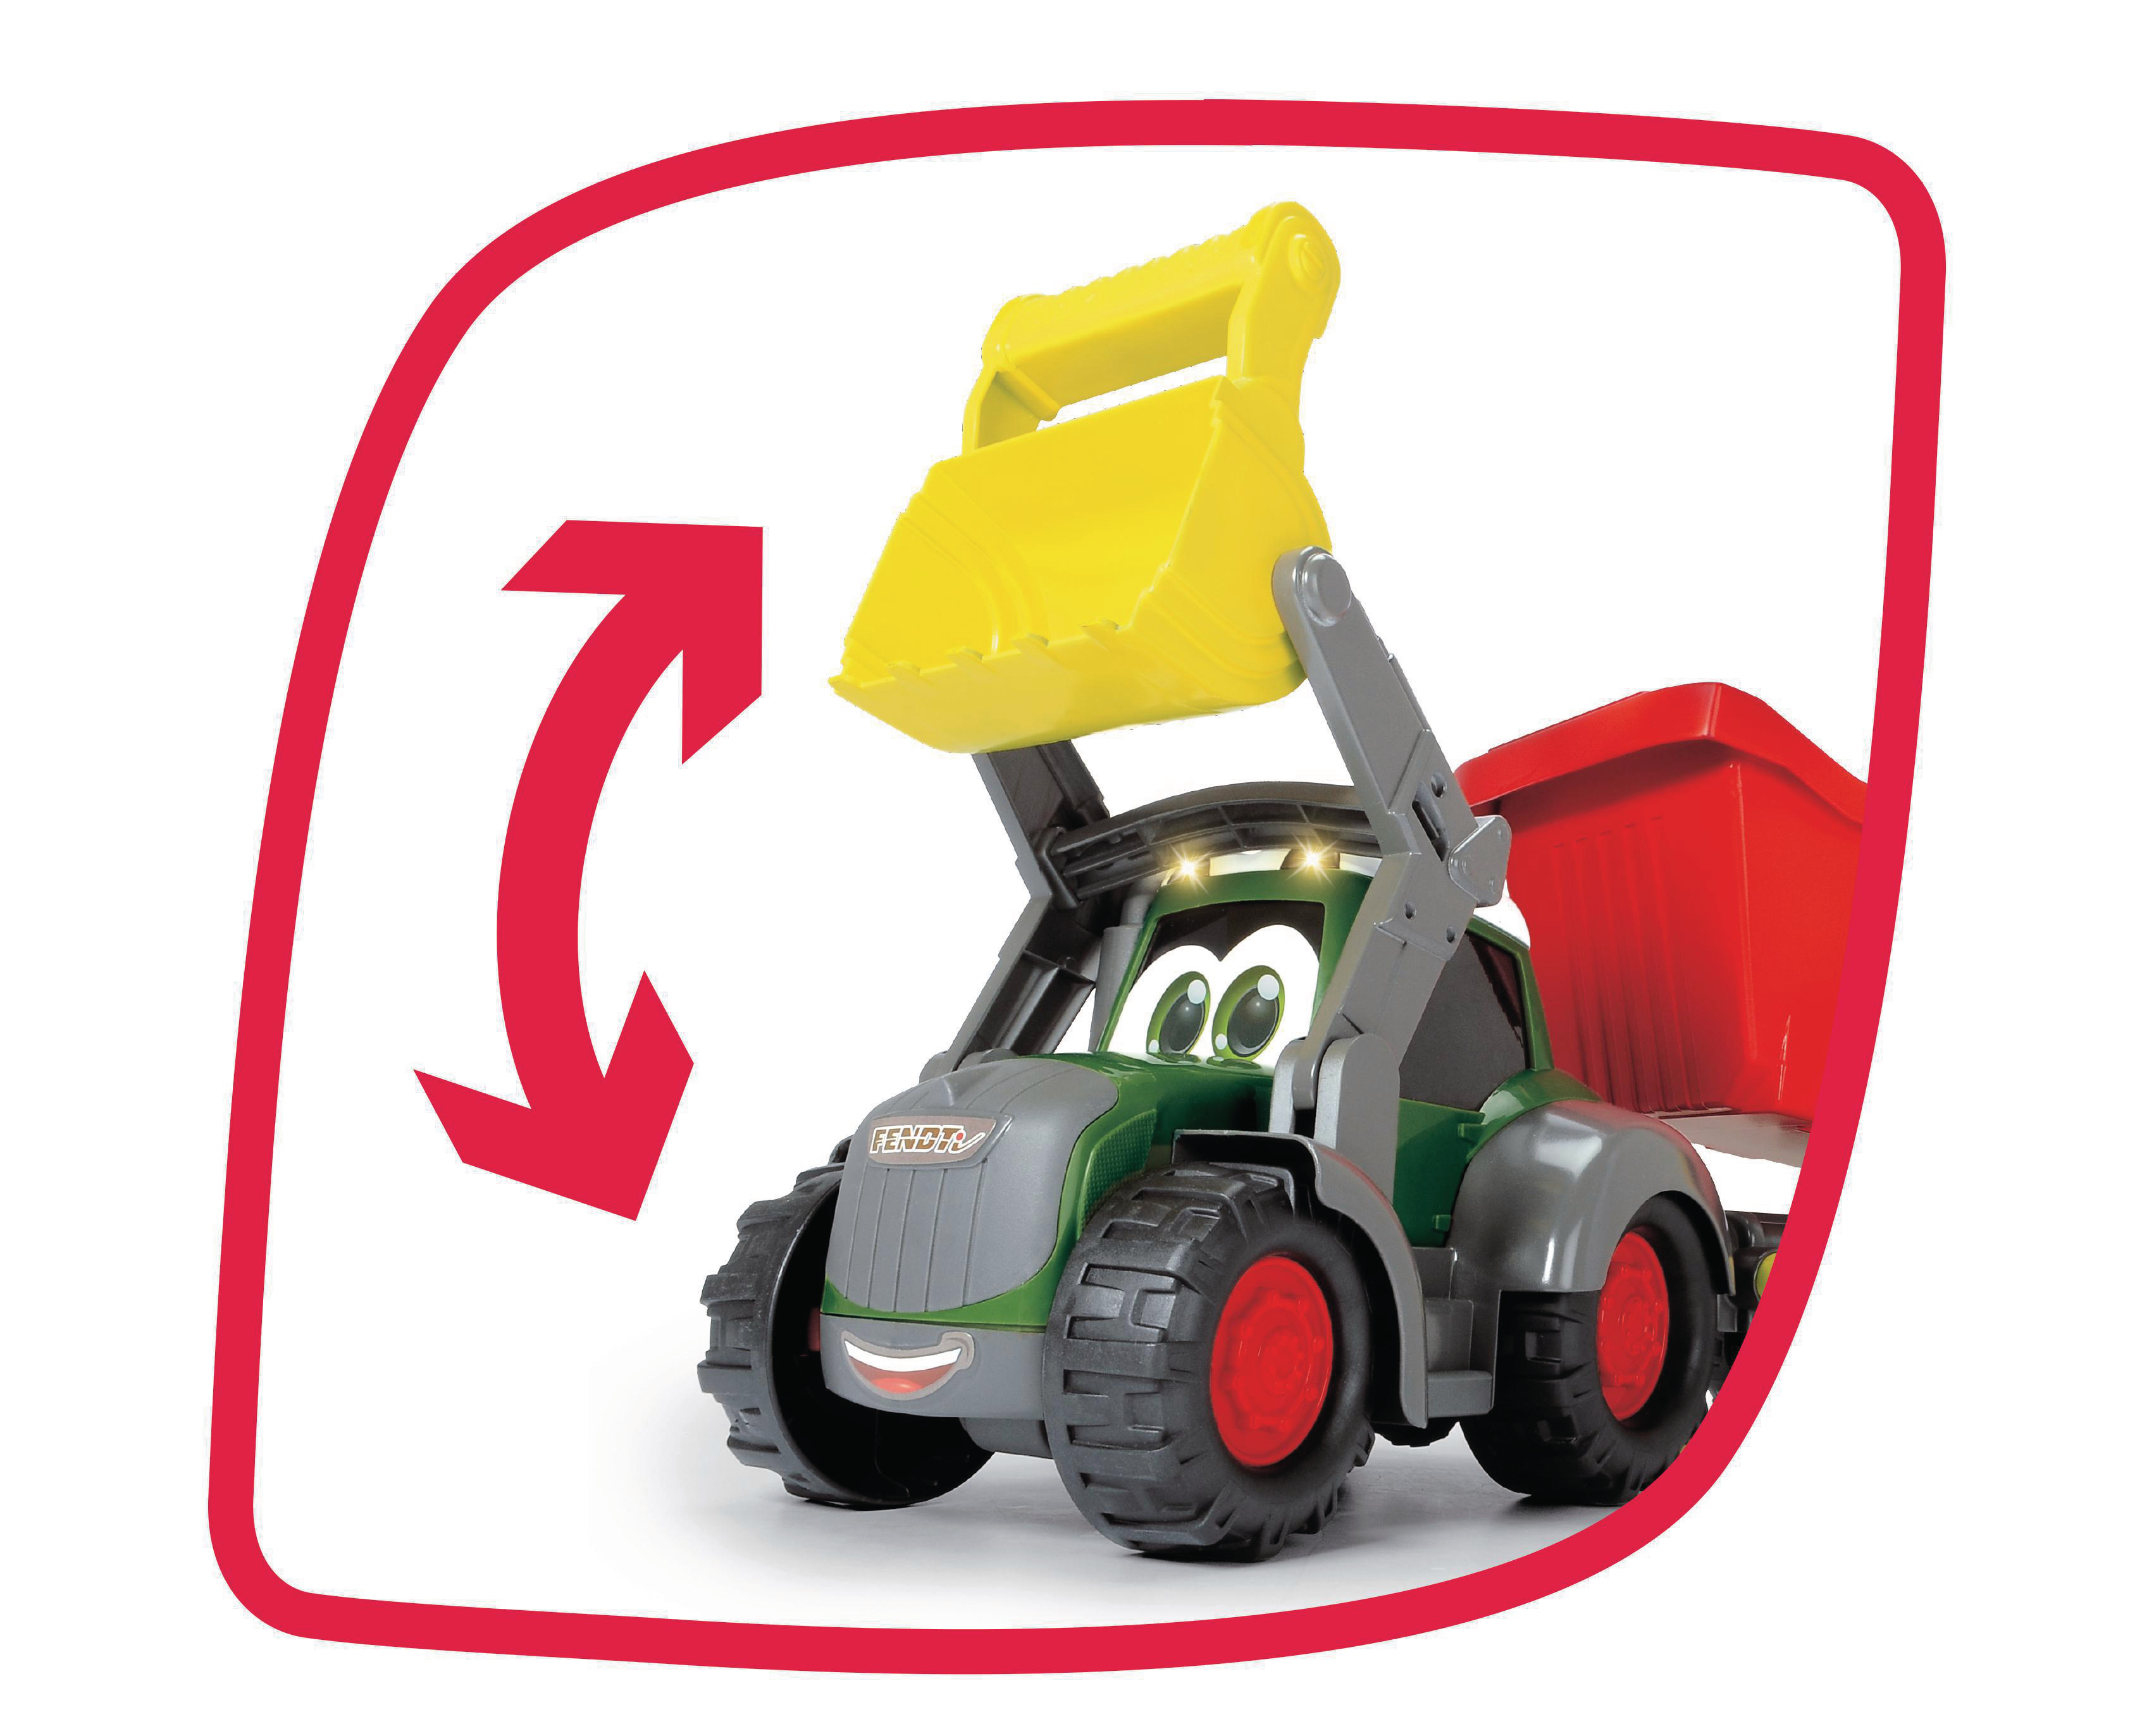 DICKIE-TOYS ABC Fendti Farm Trailer, Anhänger Traktor Spielzeugauto Mehrfarbig mit